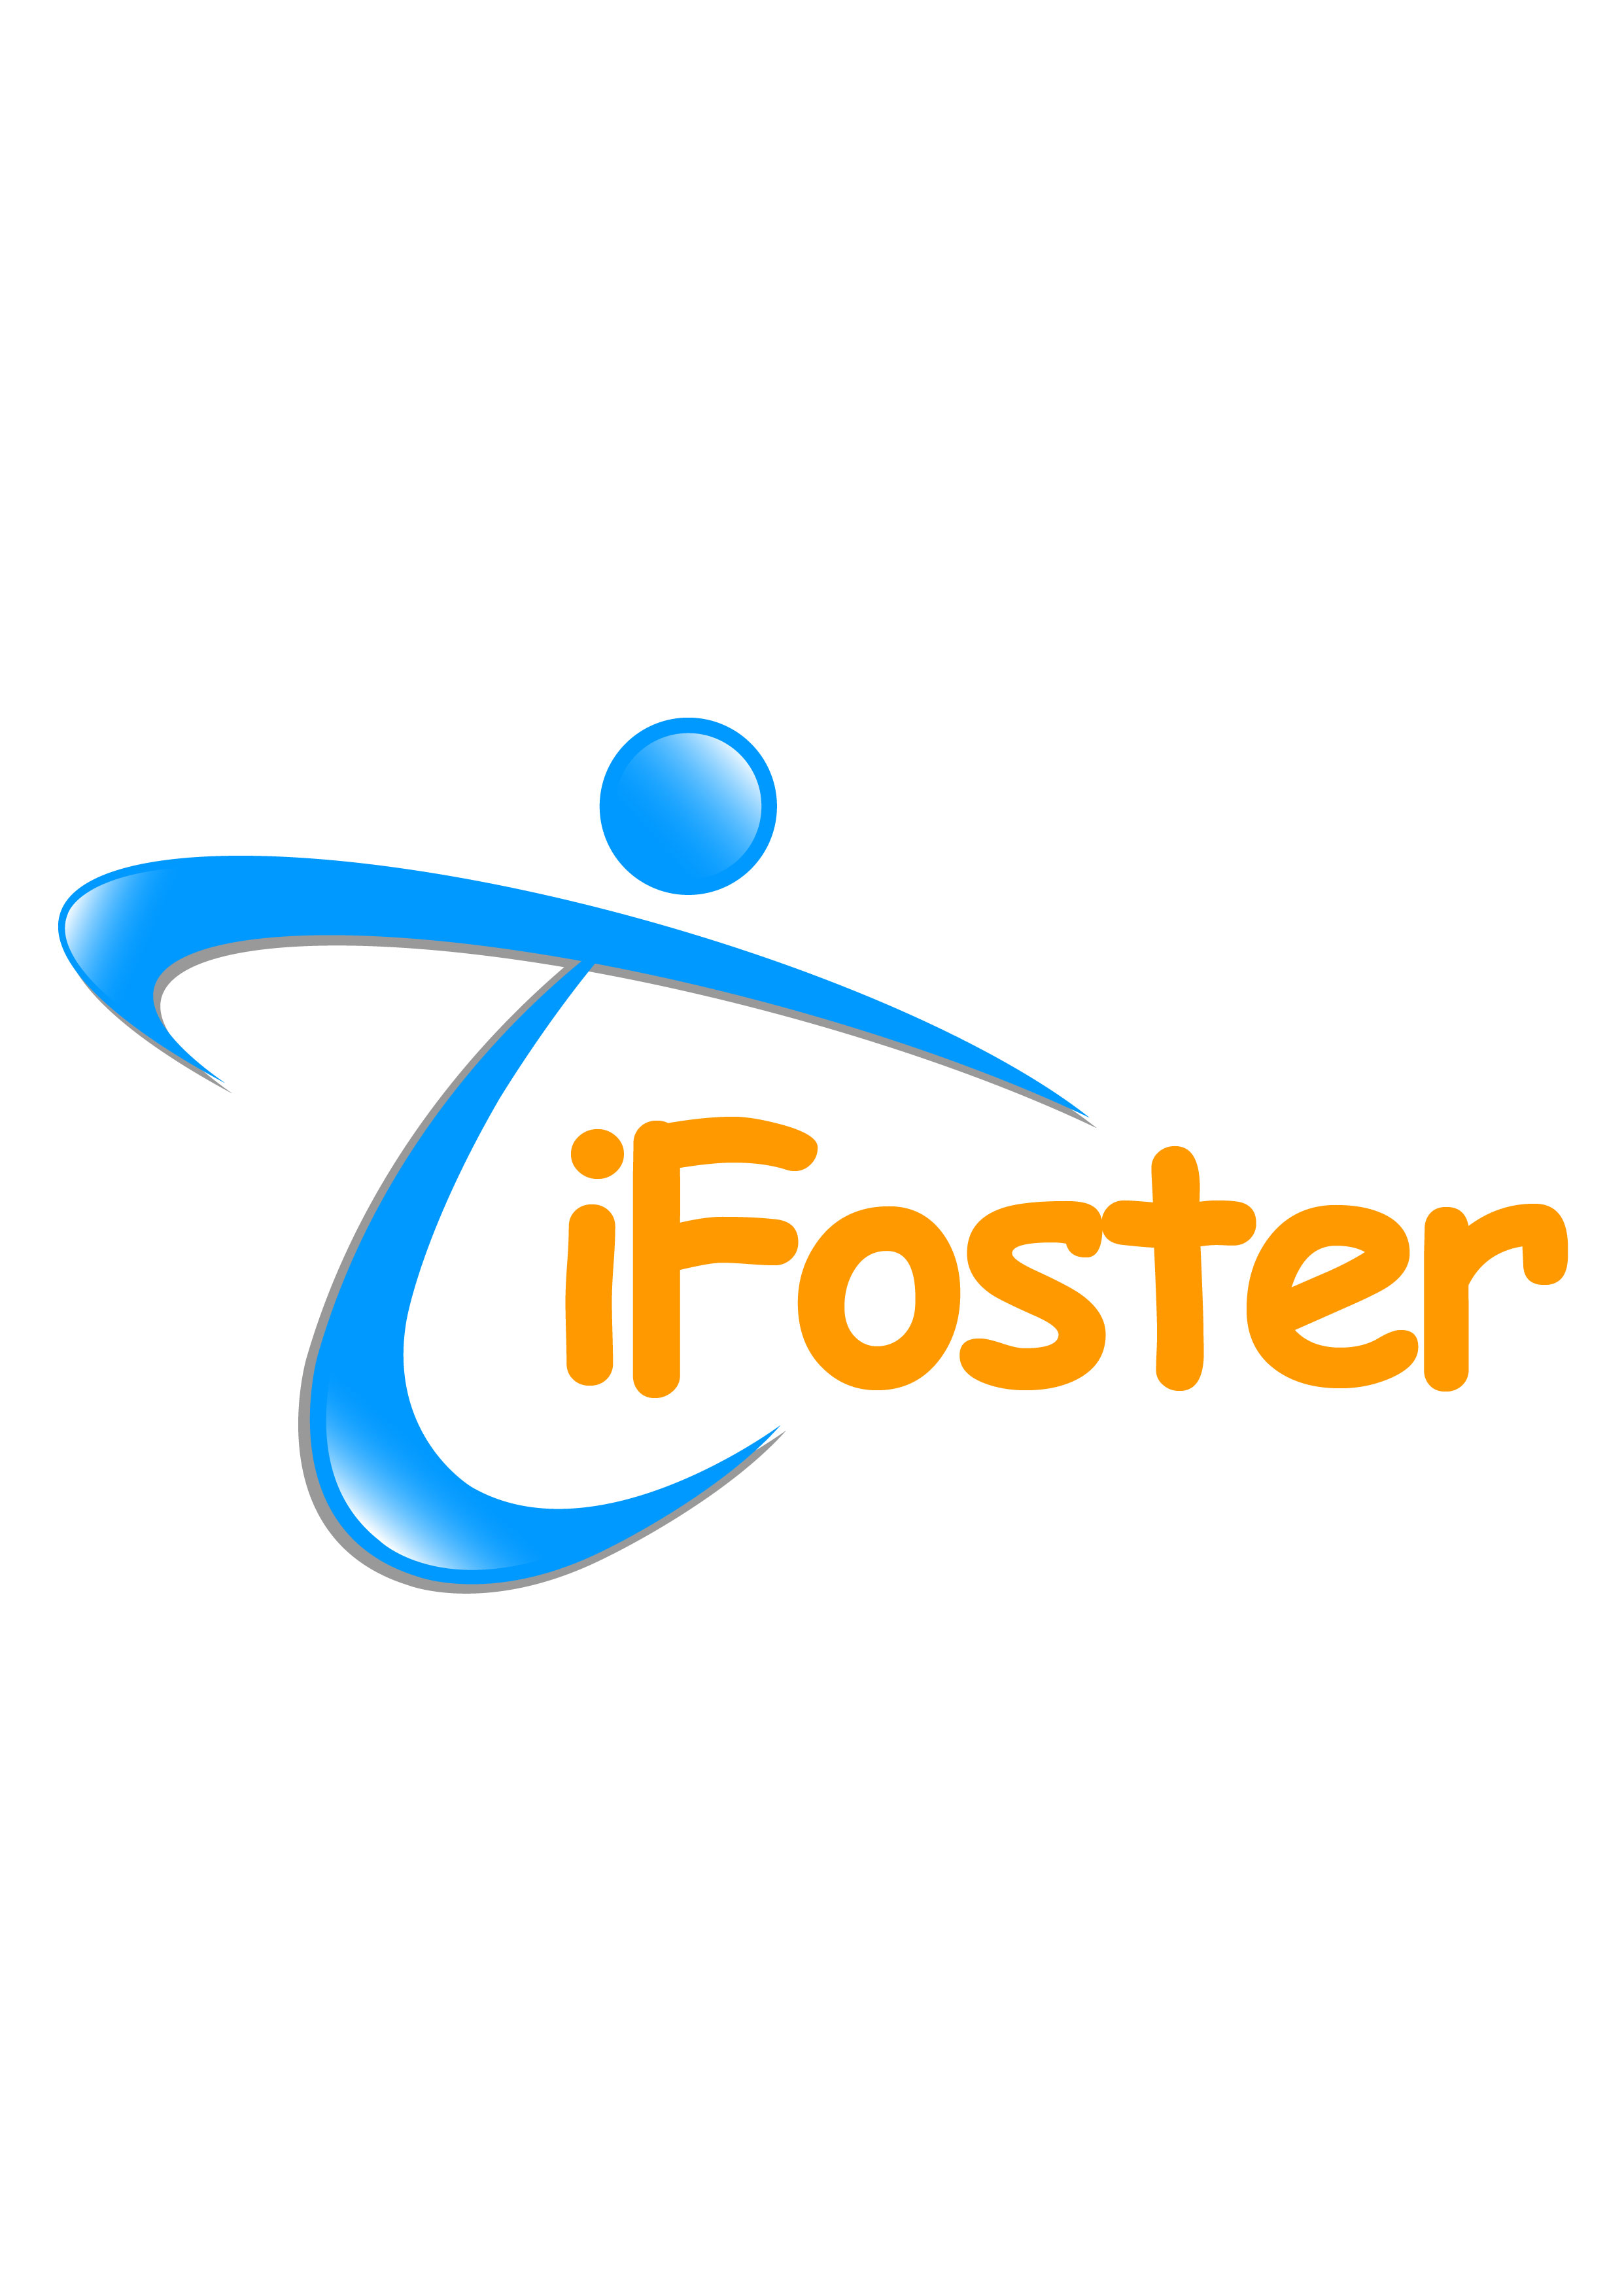 iFoster-jpg logo.jpg